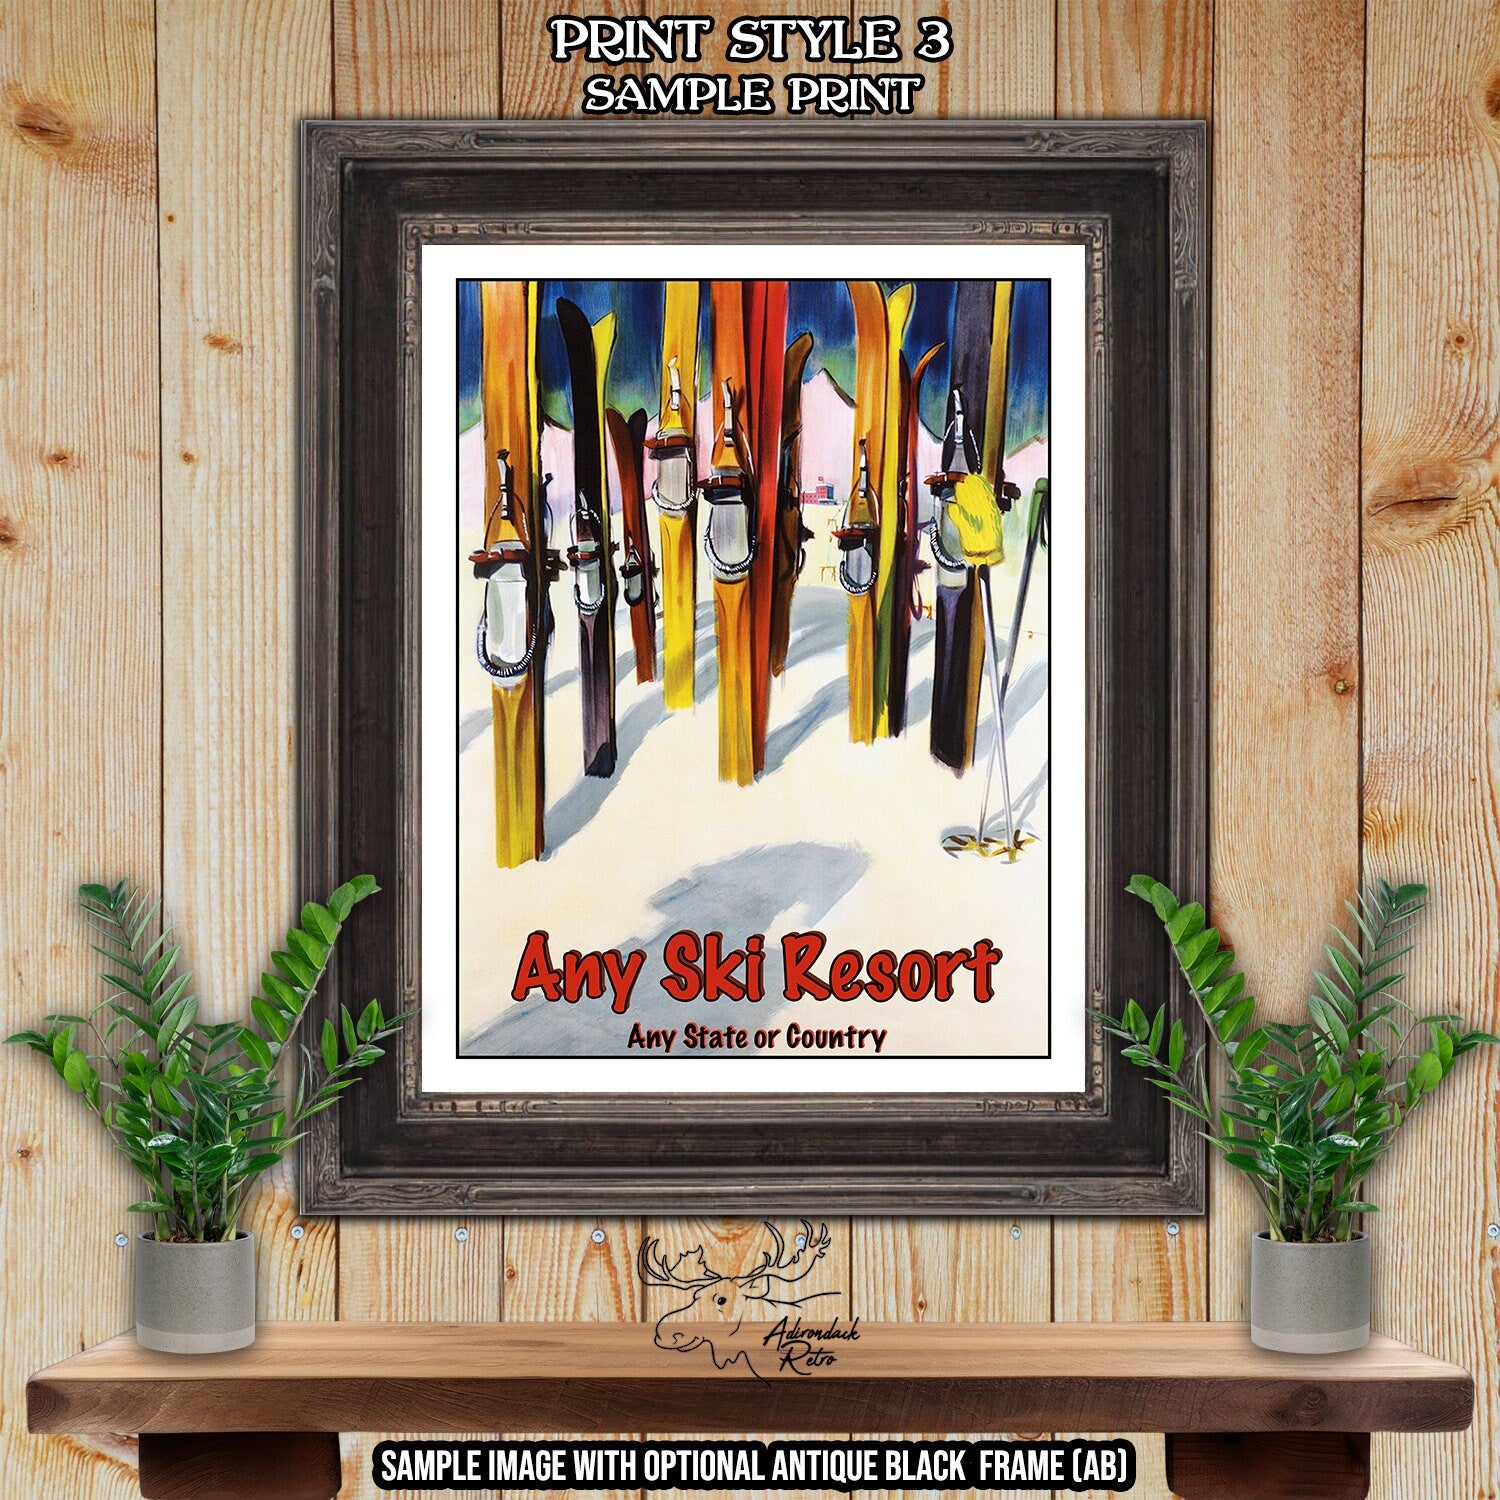 Zillertal Arena Ski Resort Print - Retro Austria Ski Resort Poster